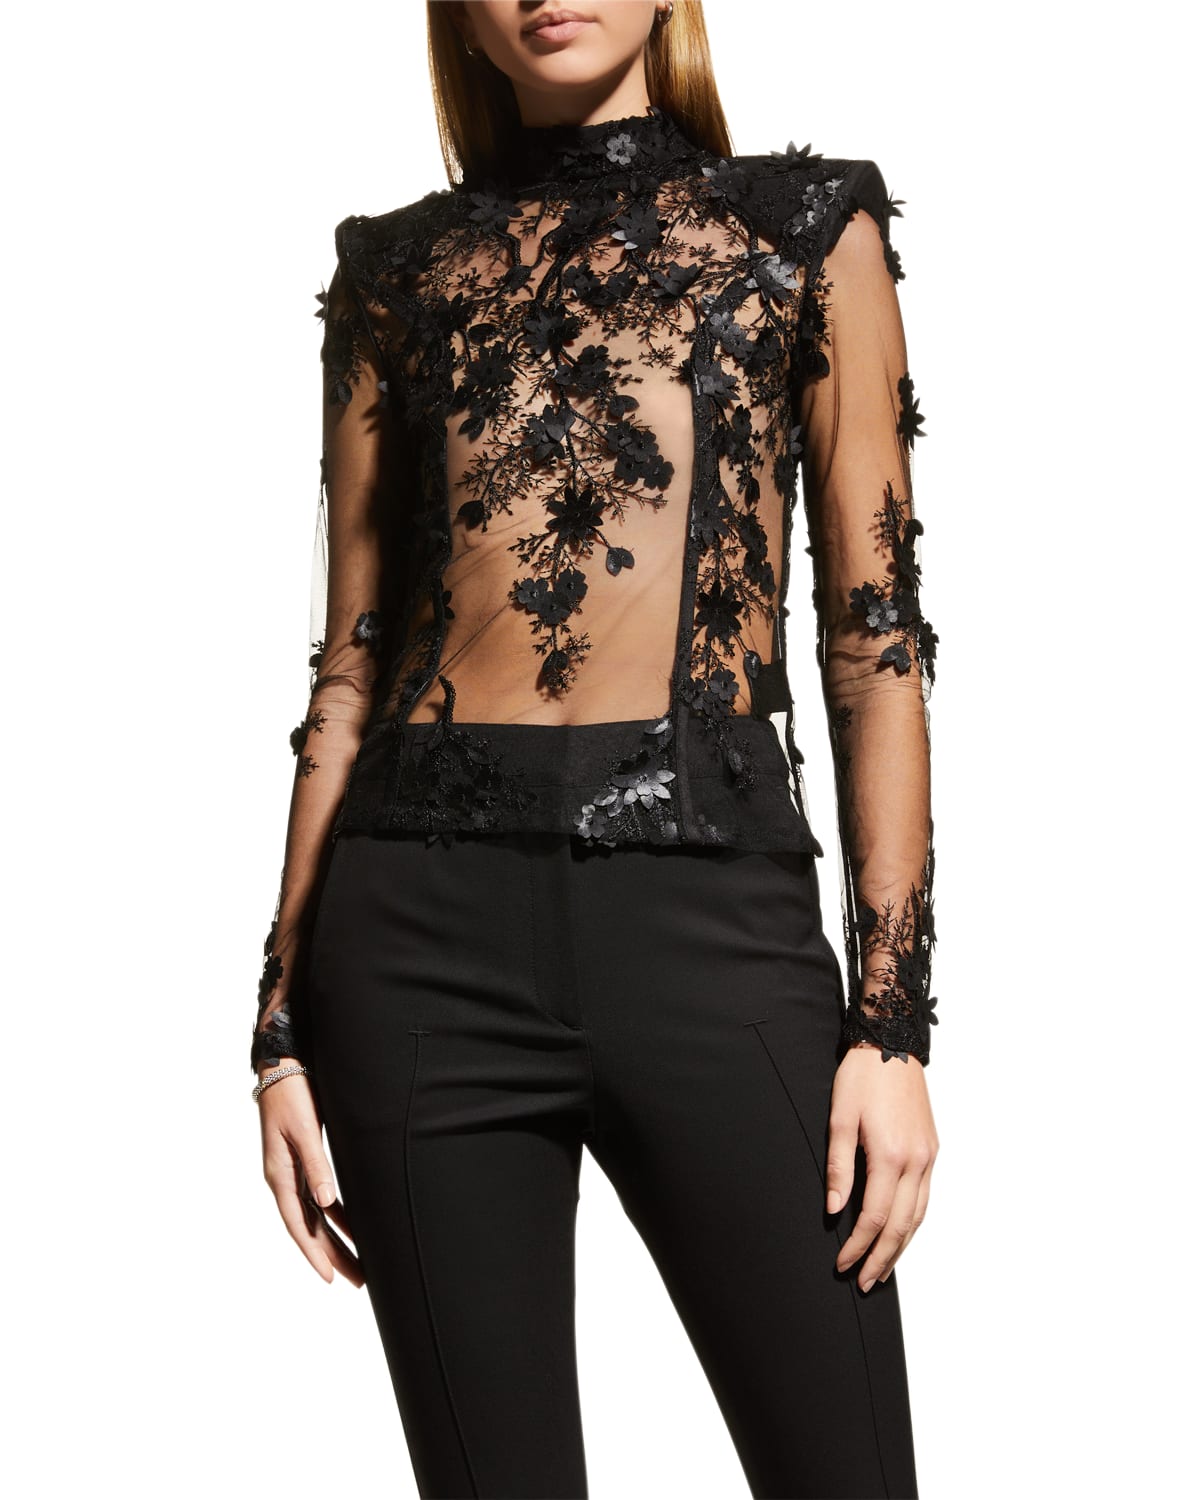 Nicowa Lace Top black allover print elegant Fashion Tops Lace Tops 